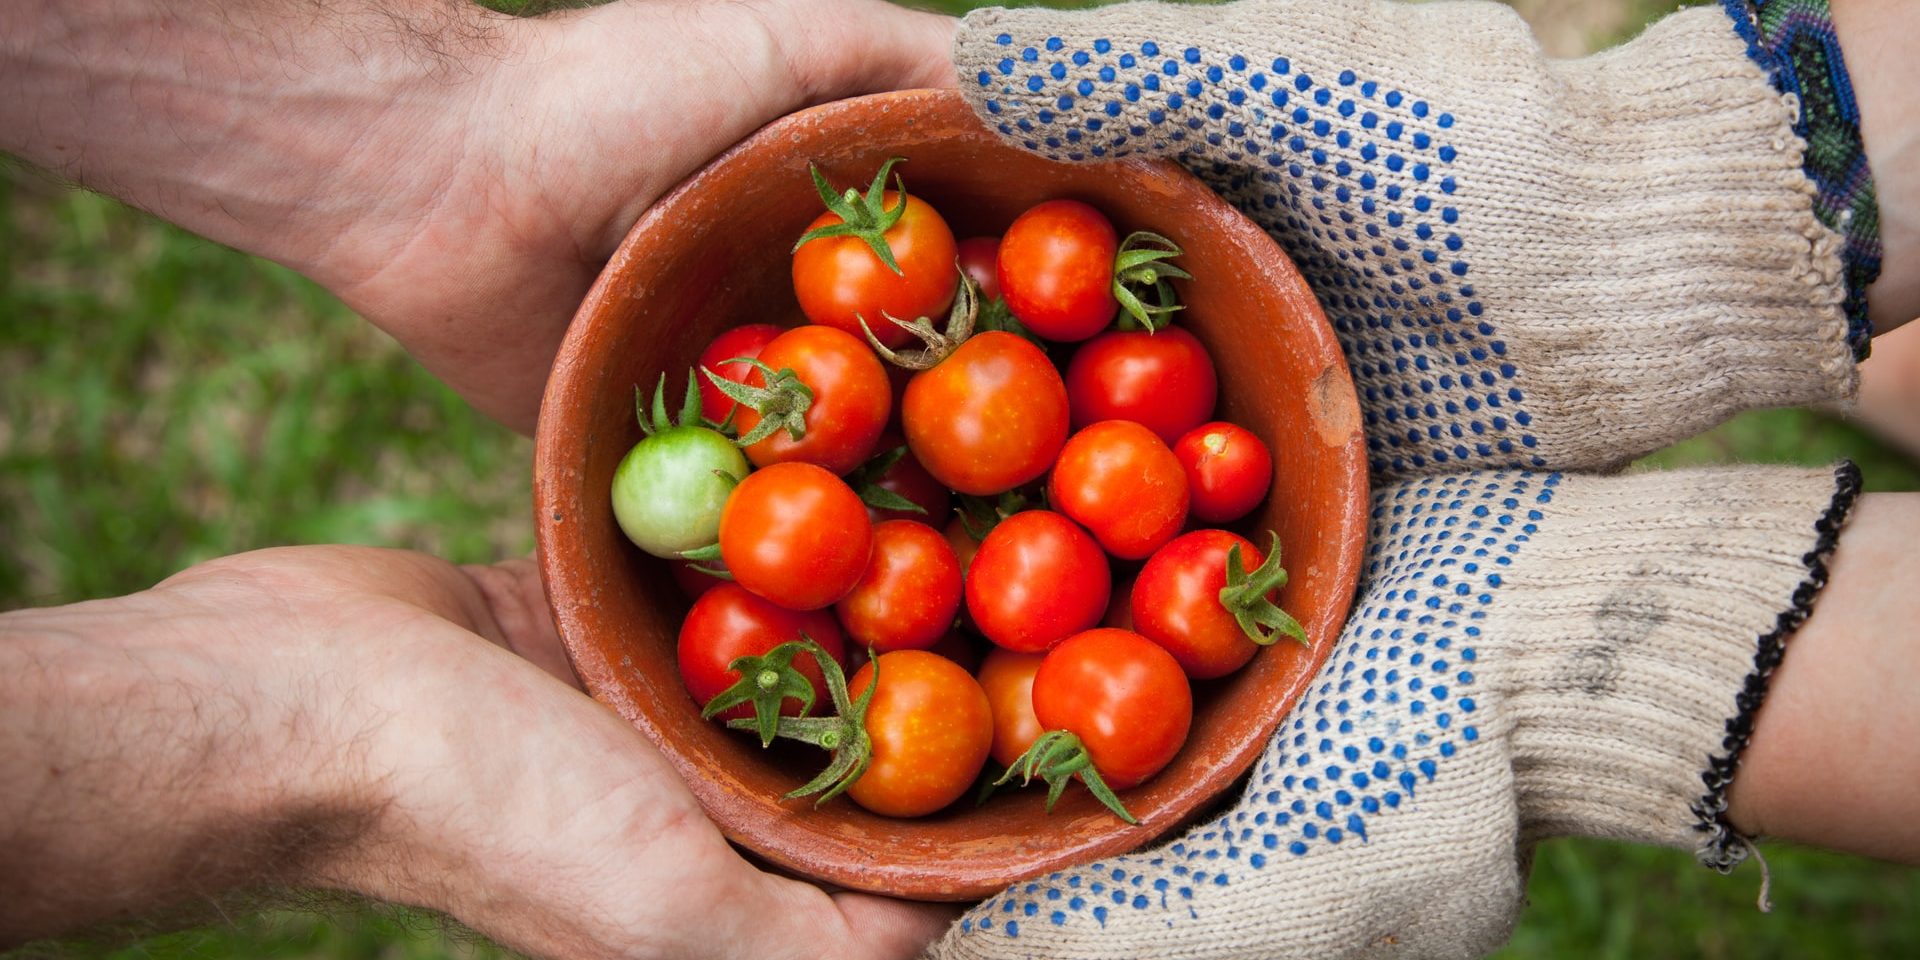 Tomatoe harvest in hands